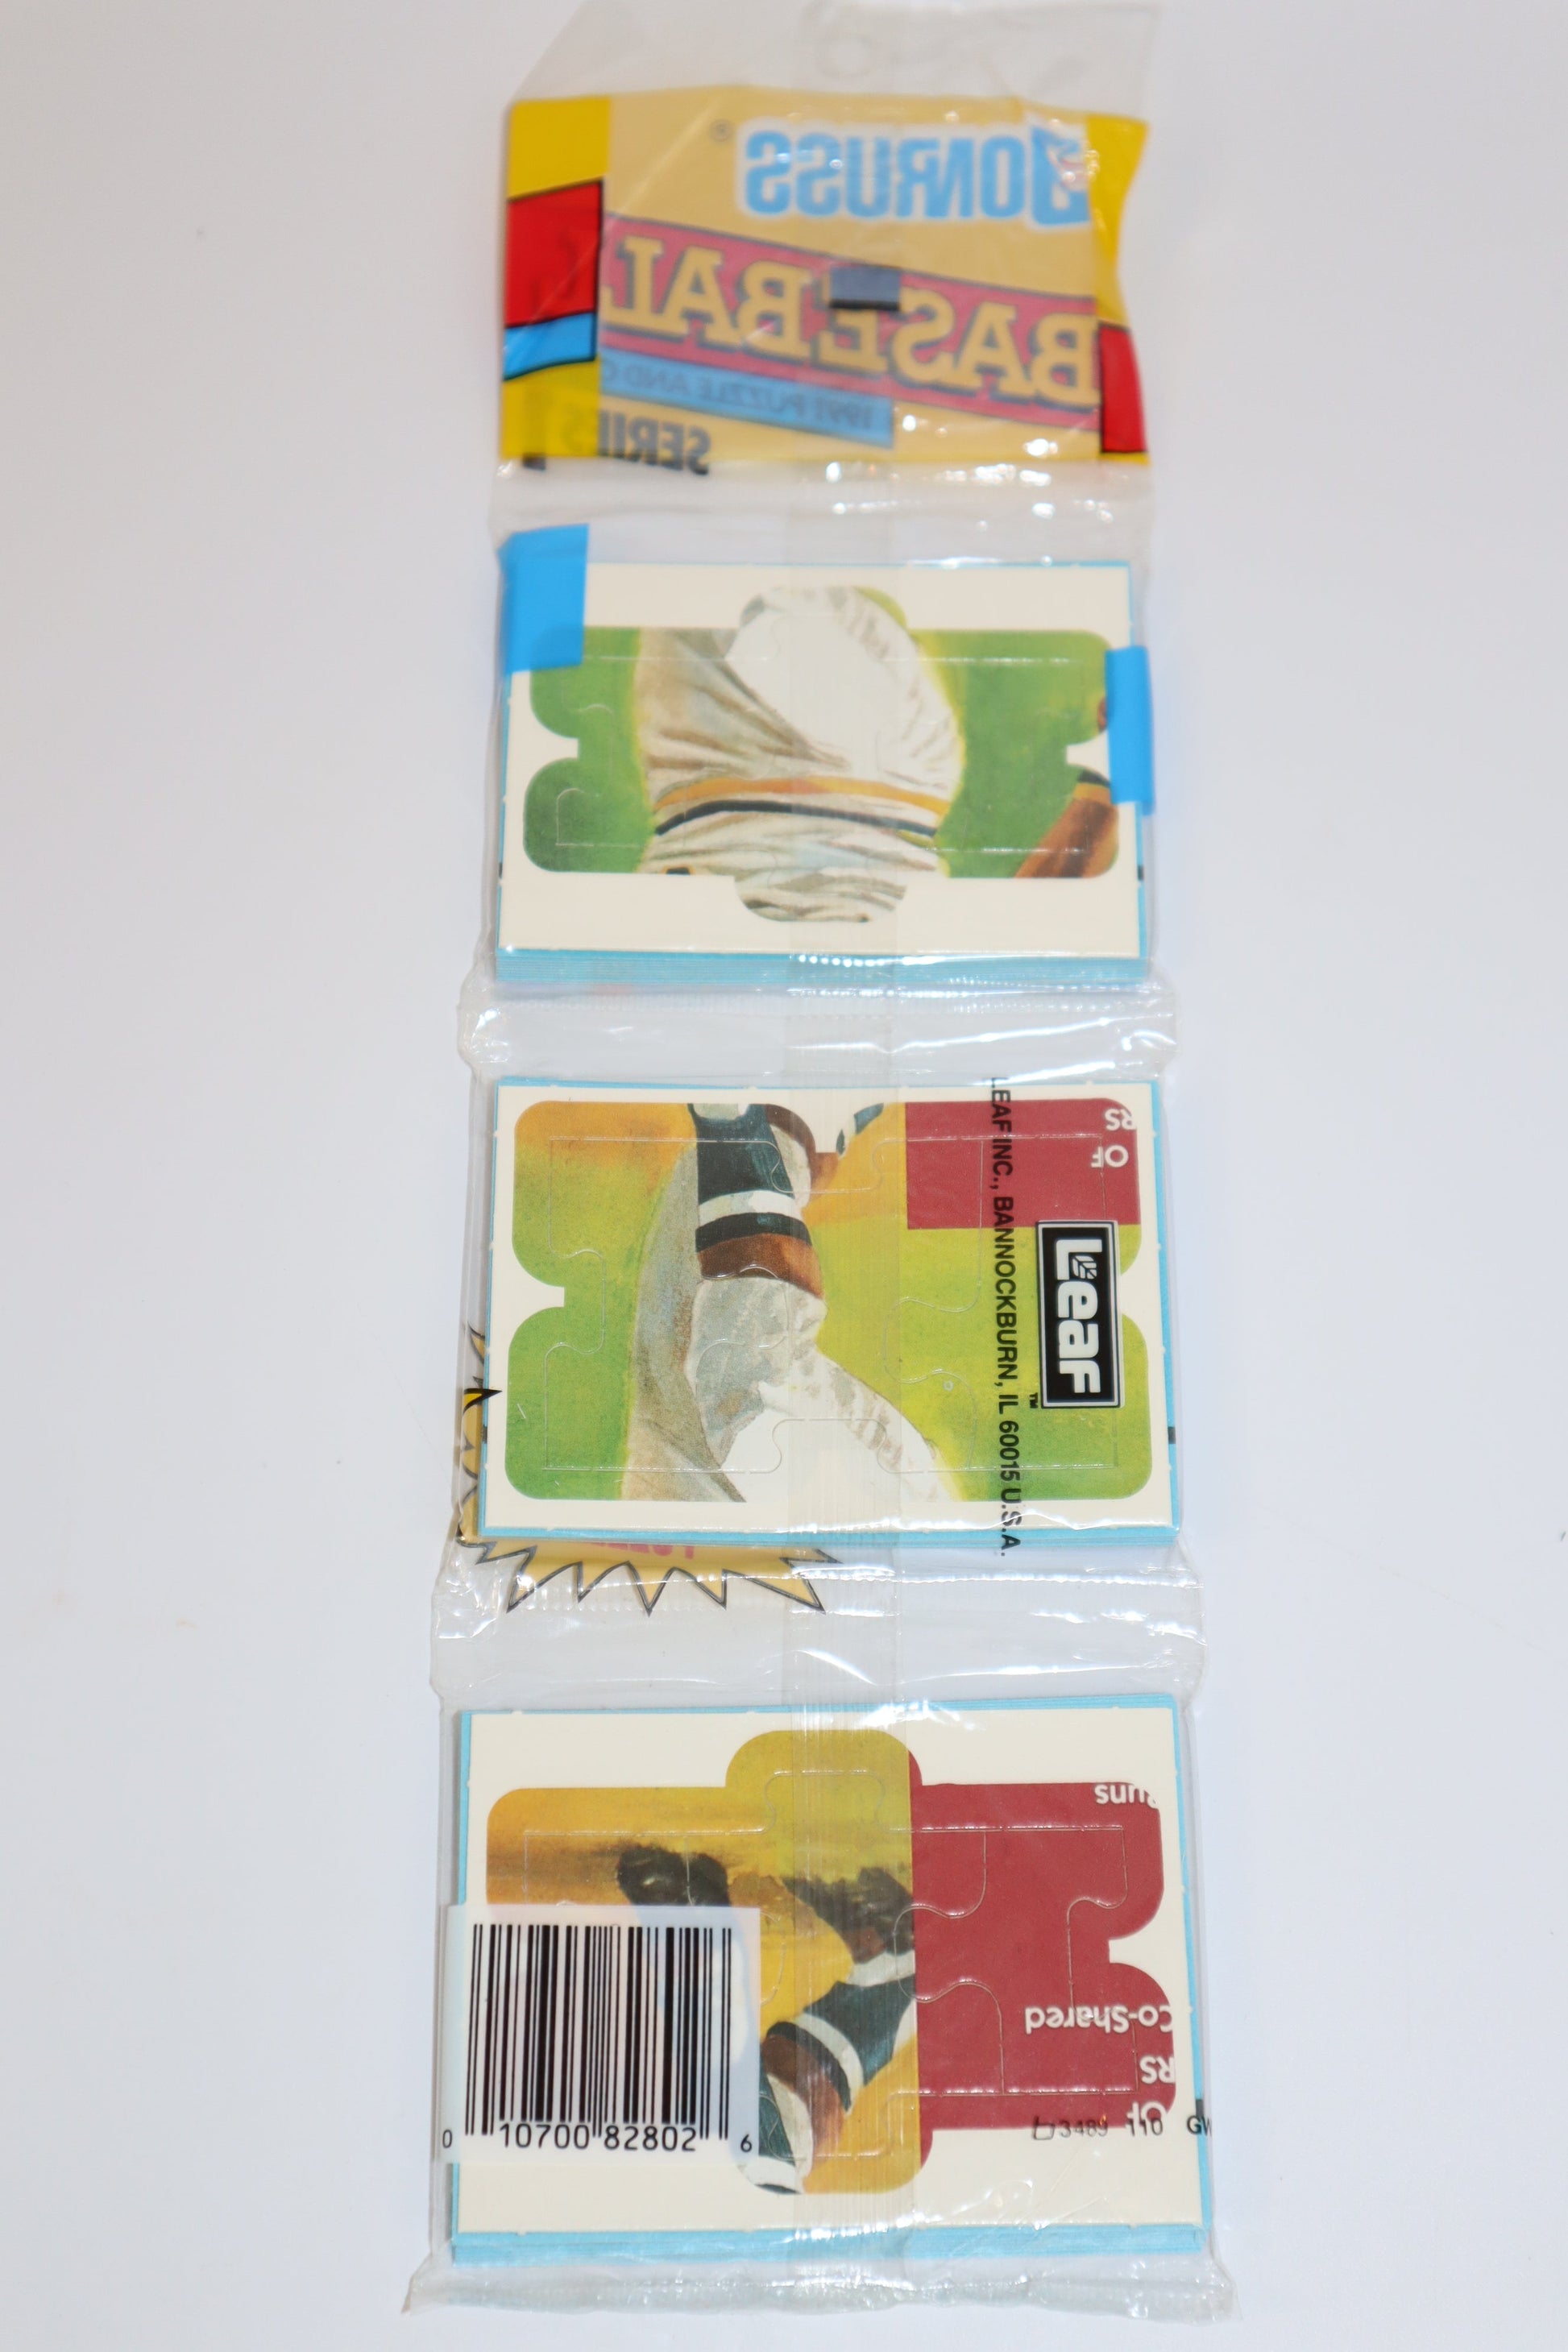 1991 Donruss Series 1 Baseball Cards Rack Pack - Collectibles